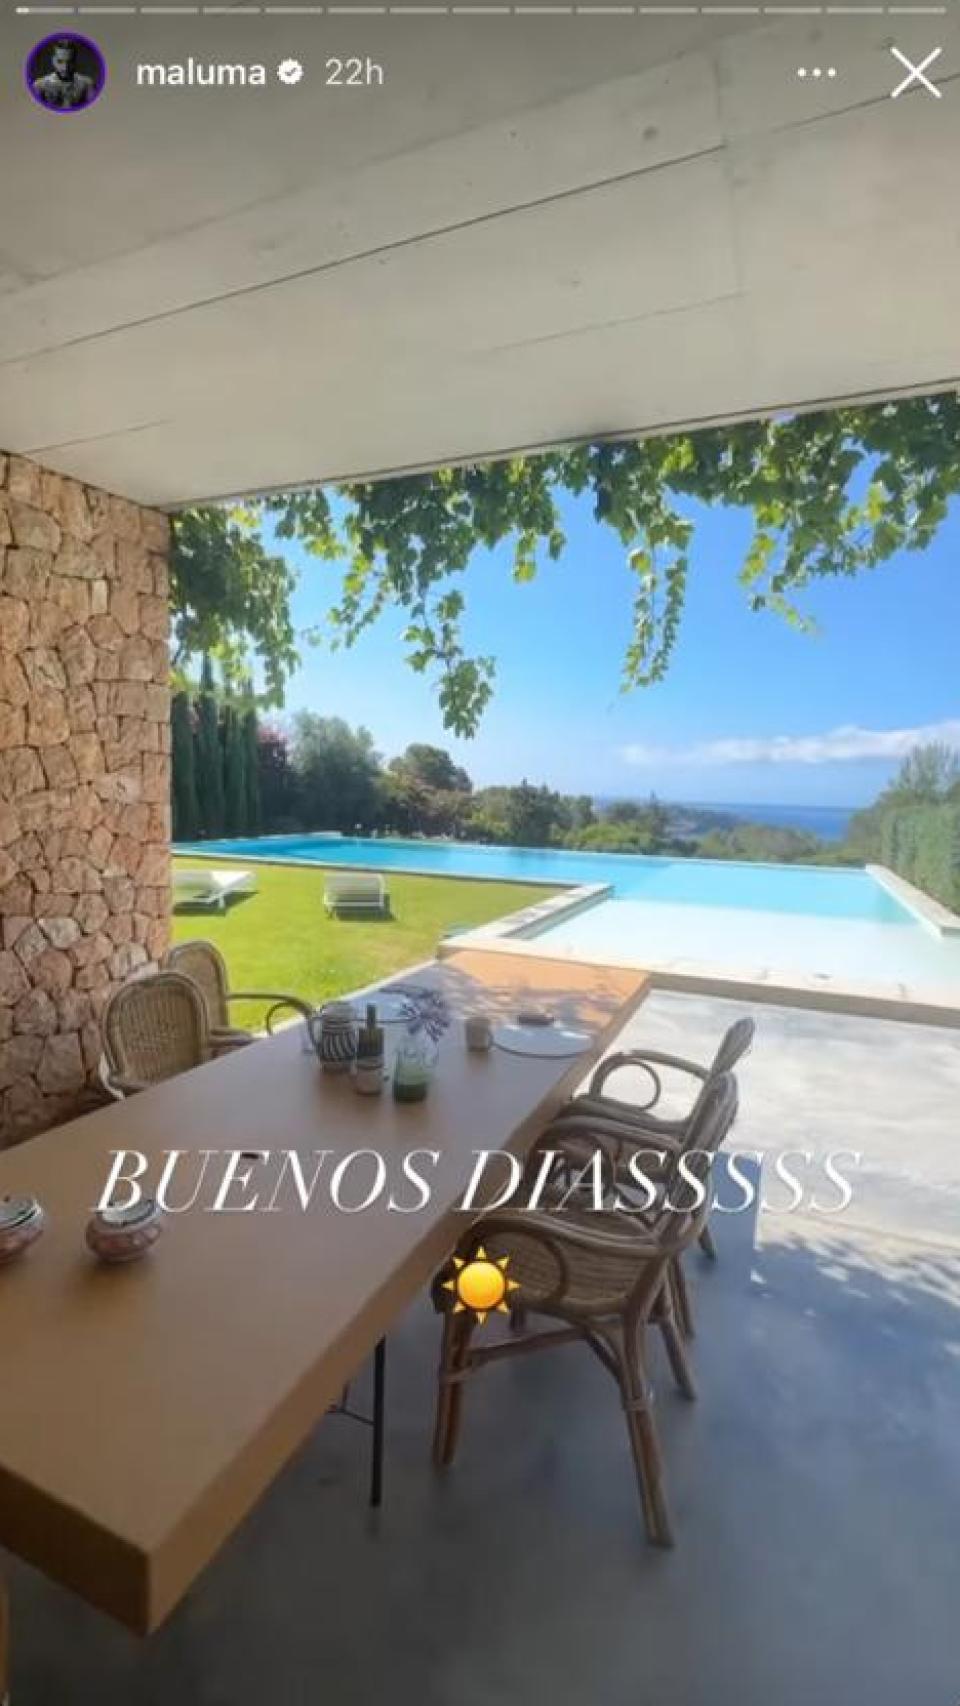 Maluma ha hecho un 'tour' por la casa a través de sus 'stories' de Instagram.